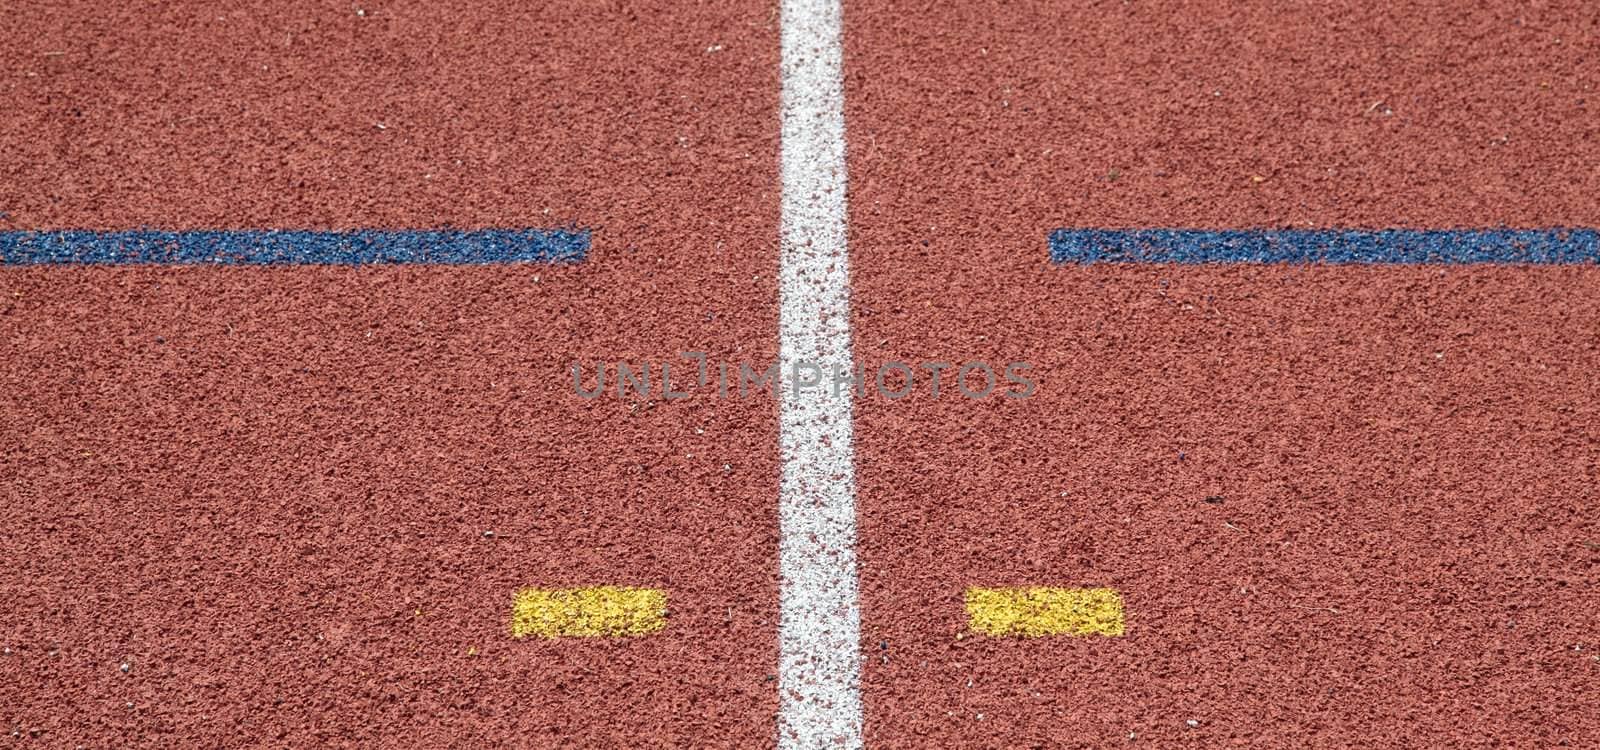 color line on race track